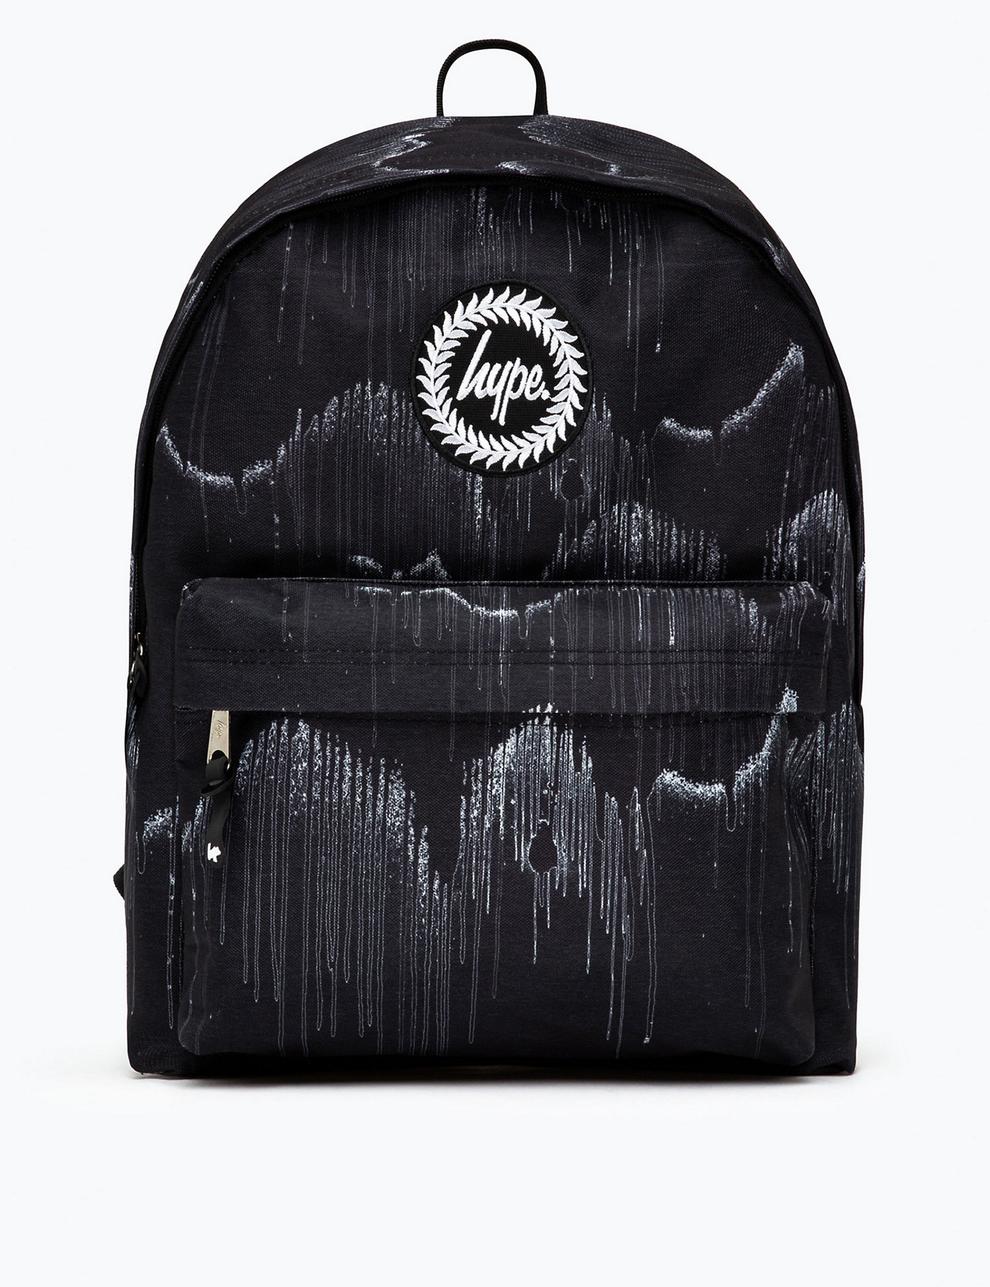 Kids' Patterned Backpack offers at £9 in Marks & Spencer